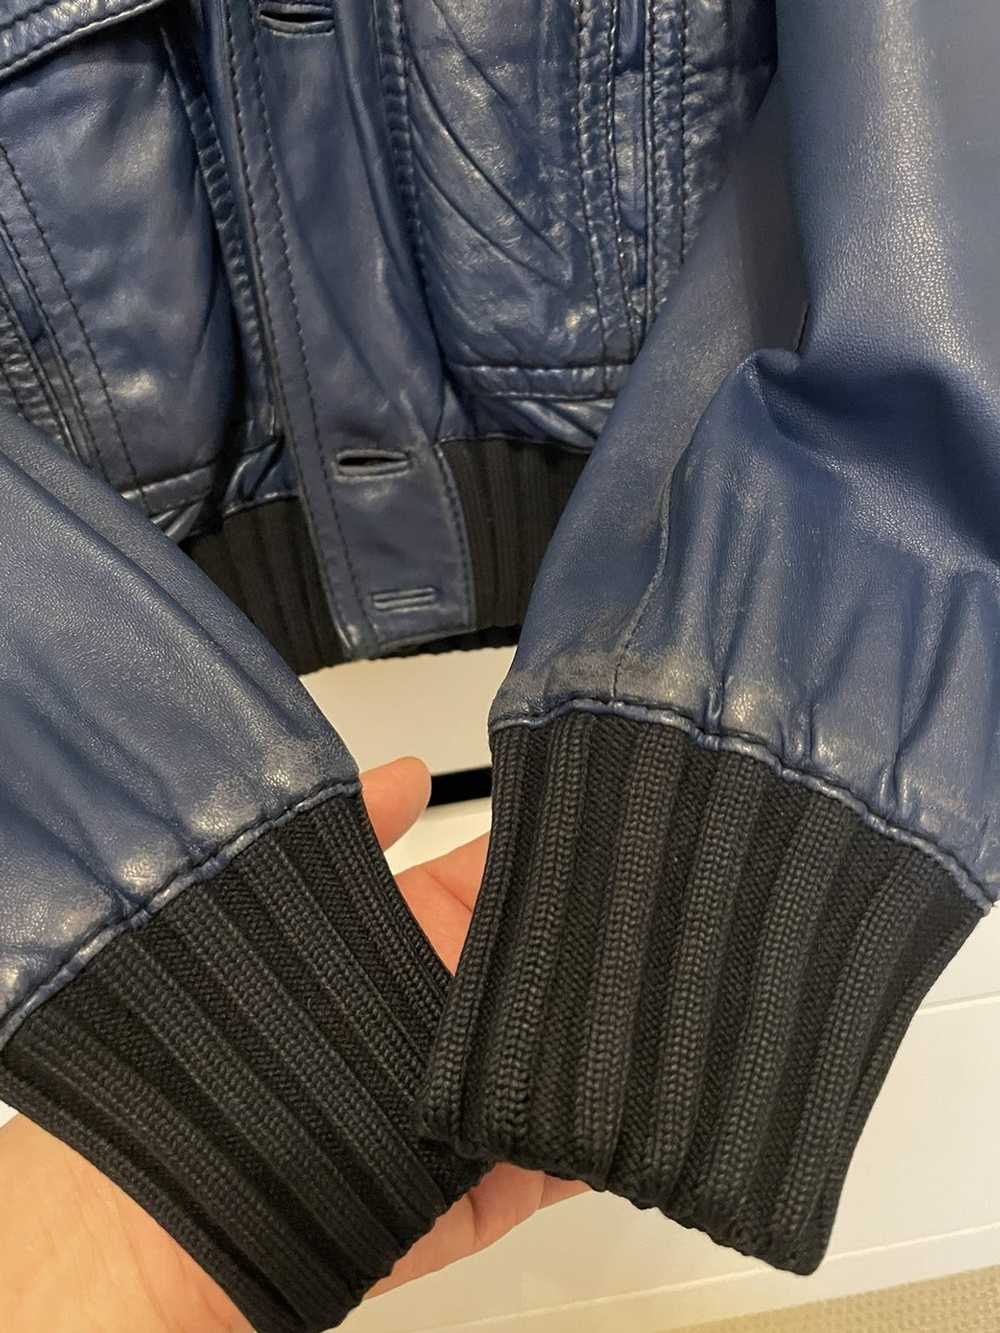 Gucci Gucci Madonna Leather Jacket - image 8